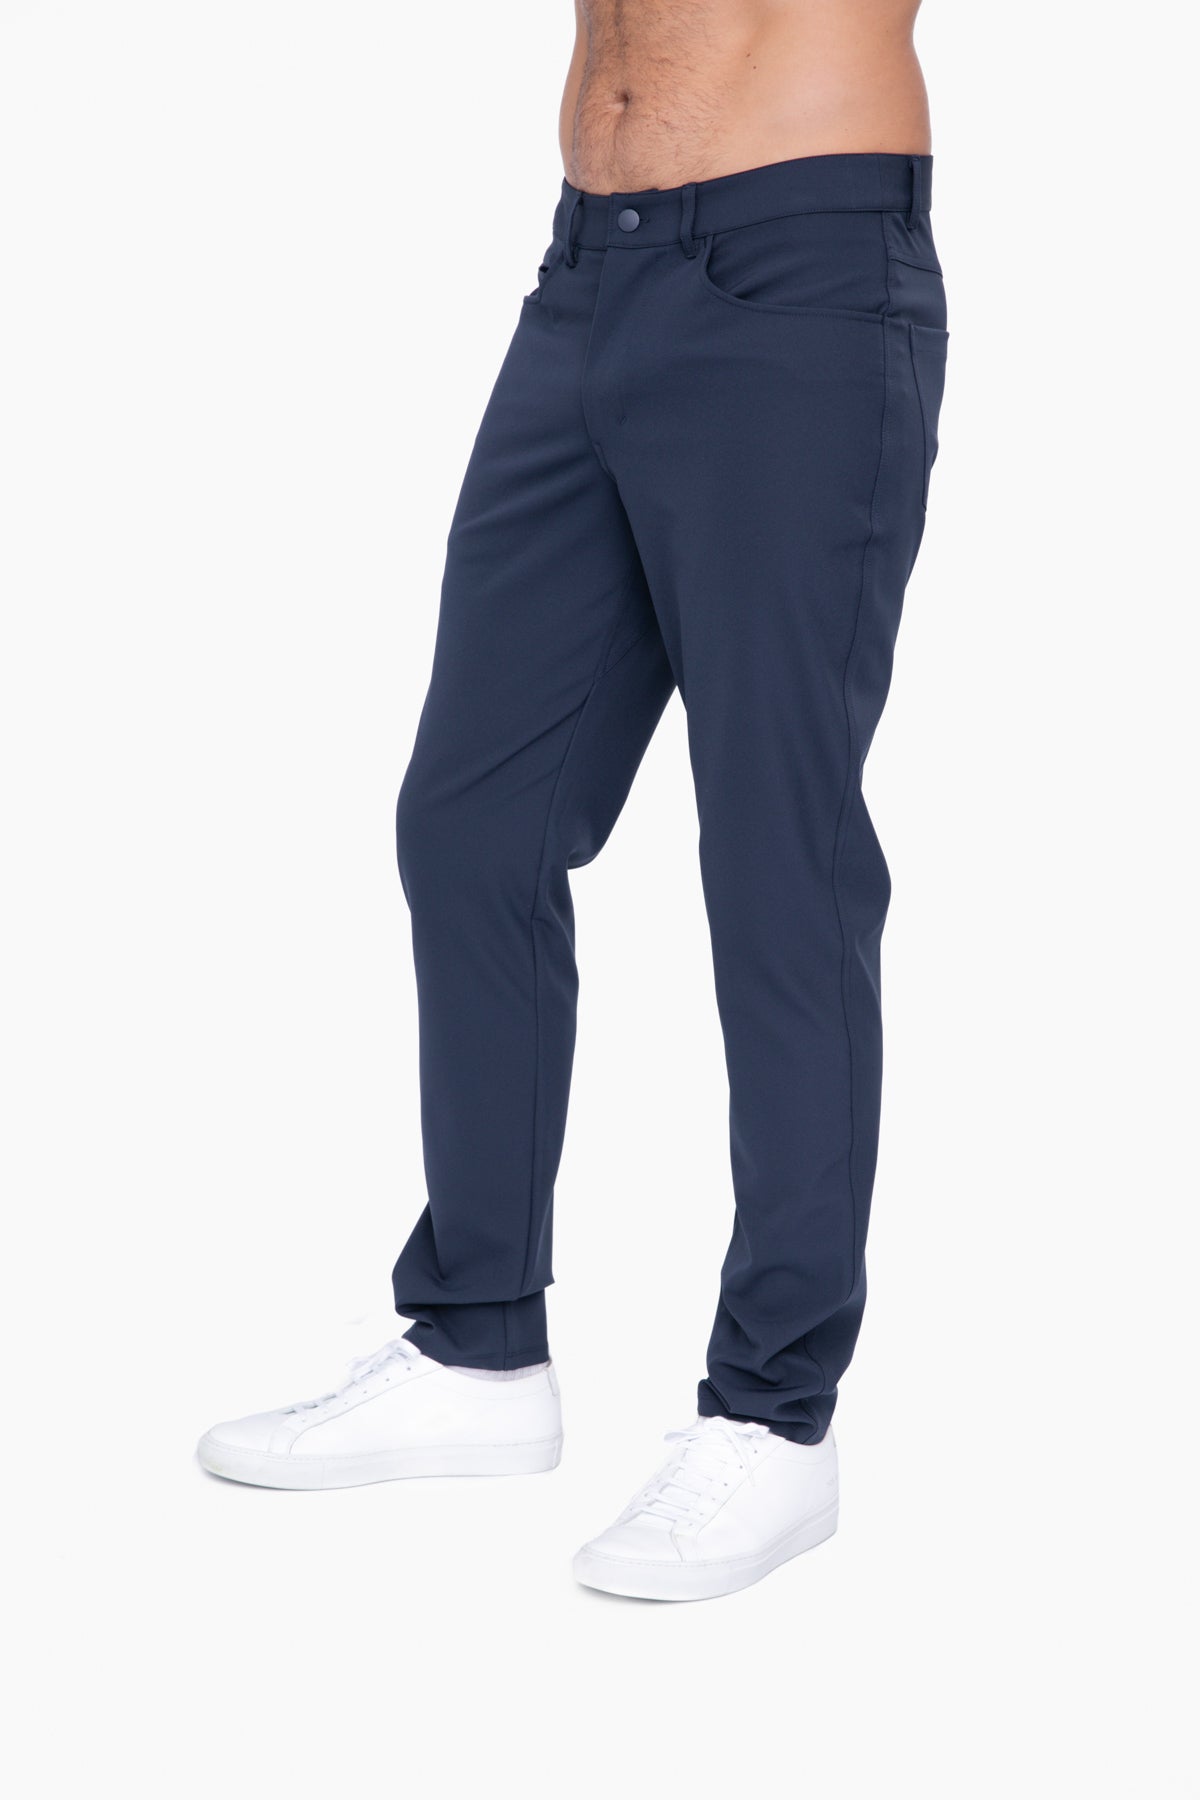 MEN'S - 5 Pocket Golf Pants - Navy